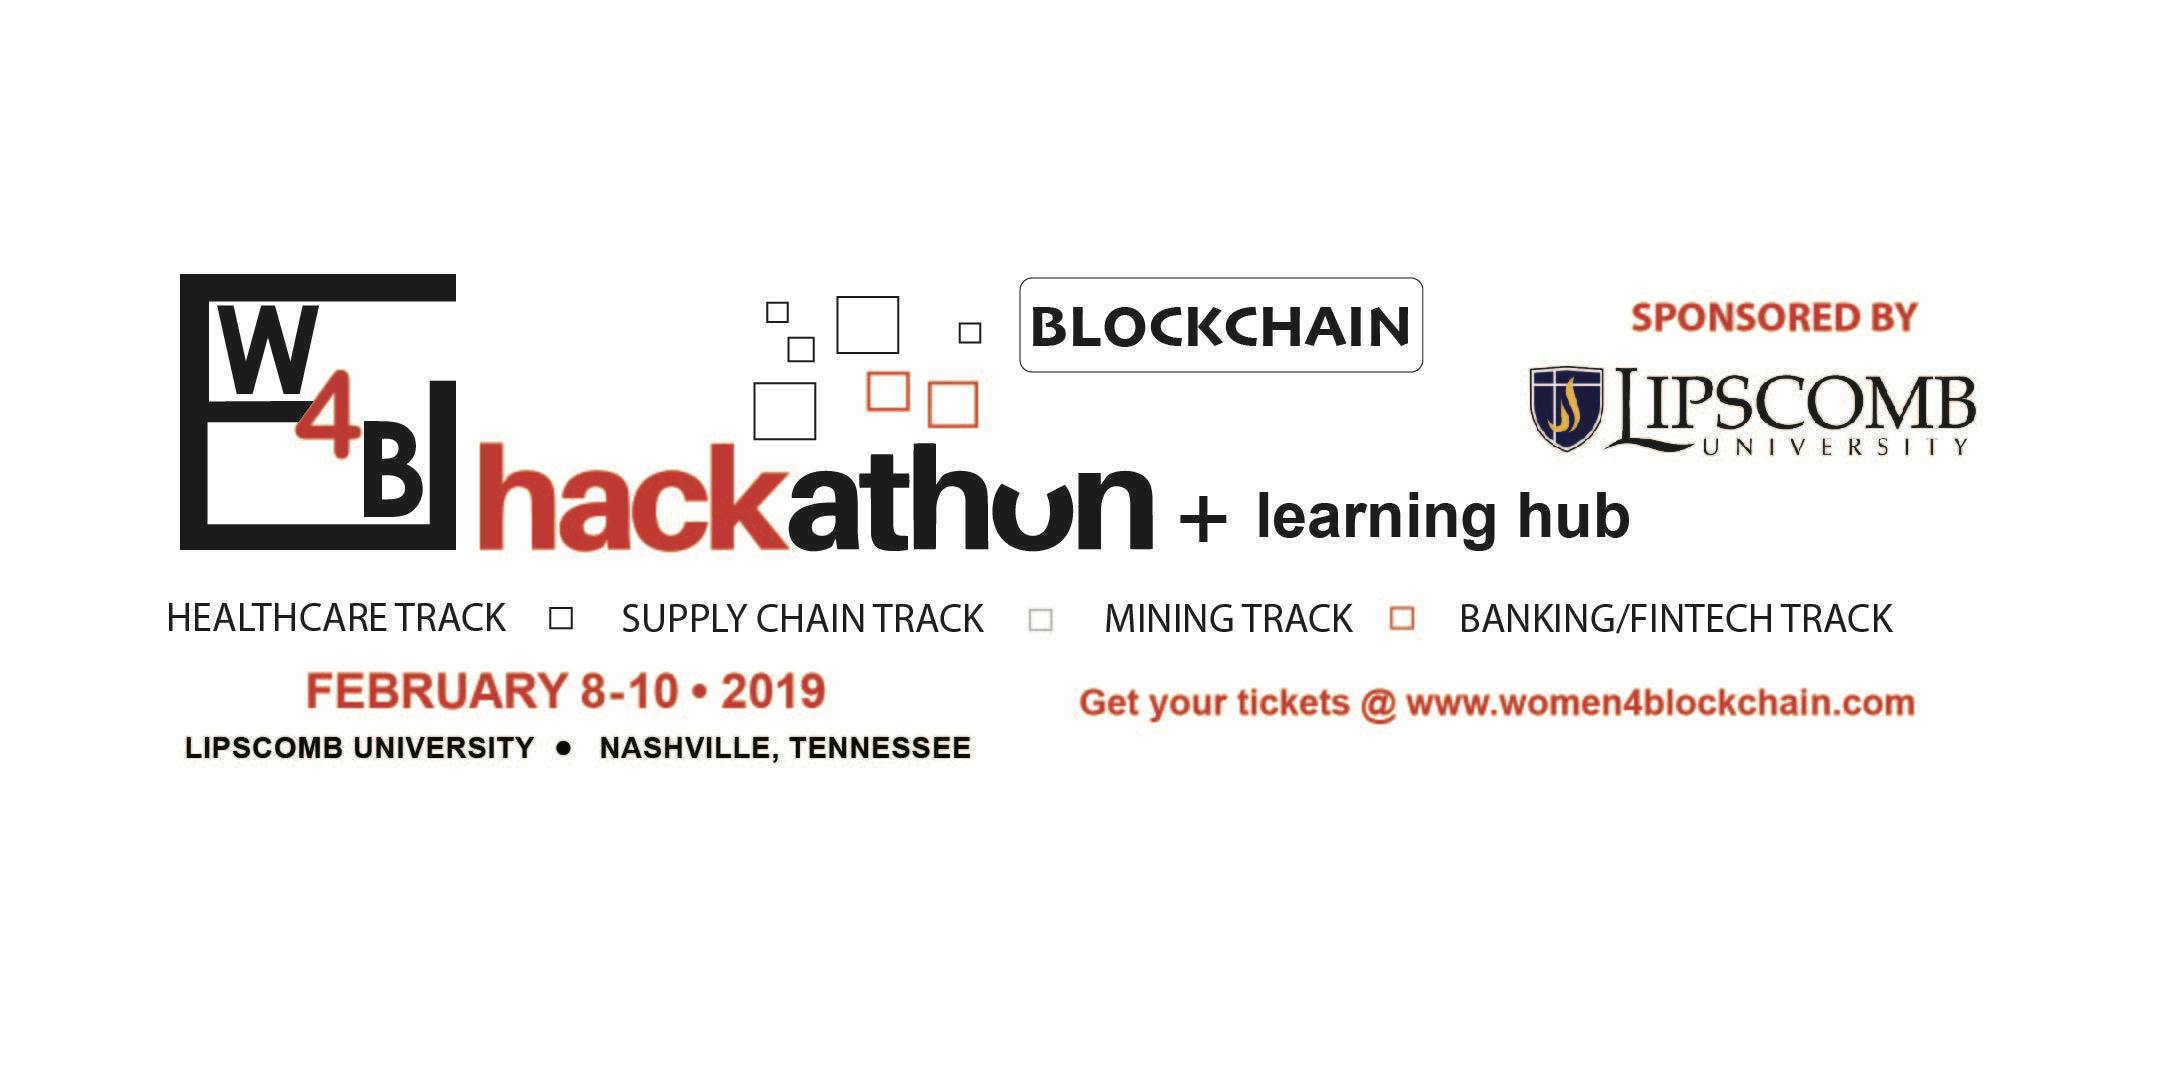 Blockchain W4B Nashville Hackathon + Learning Hub